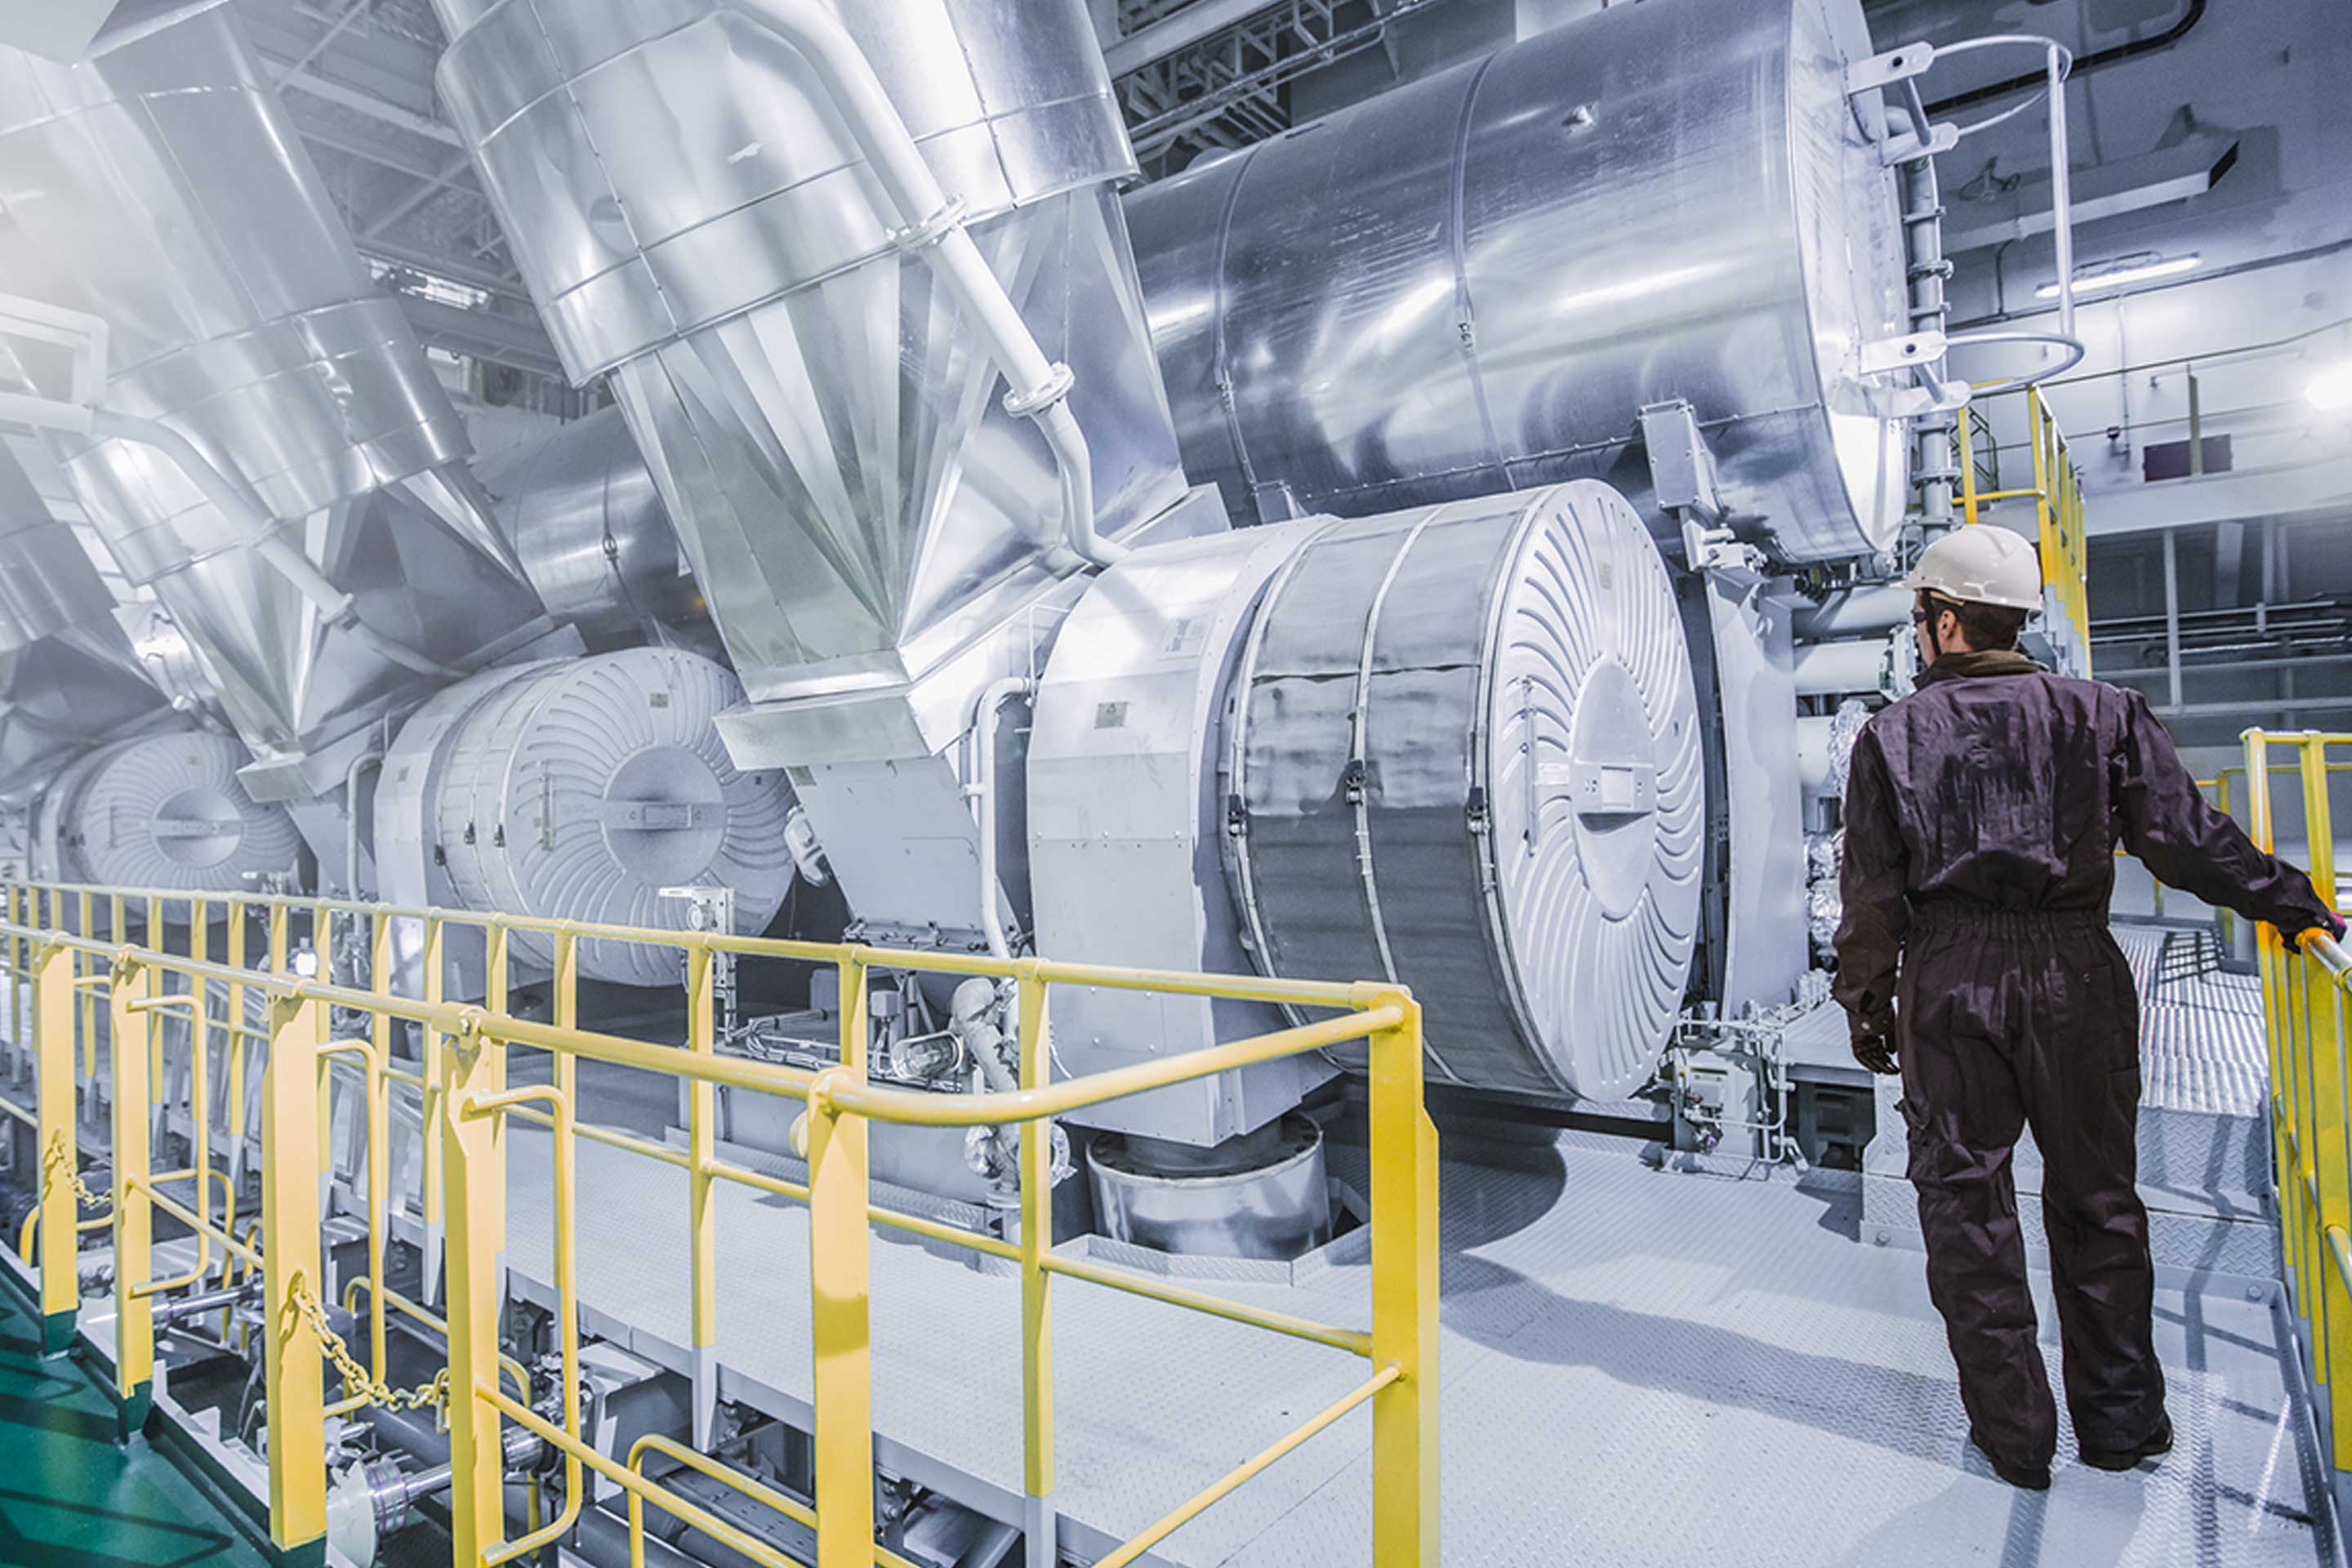 An image of an Accelleron engineer alongside Accelleron turbochargers